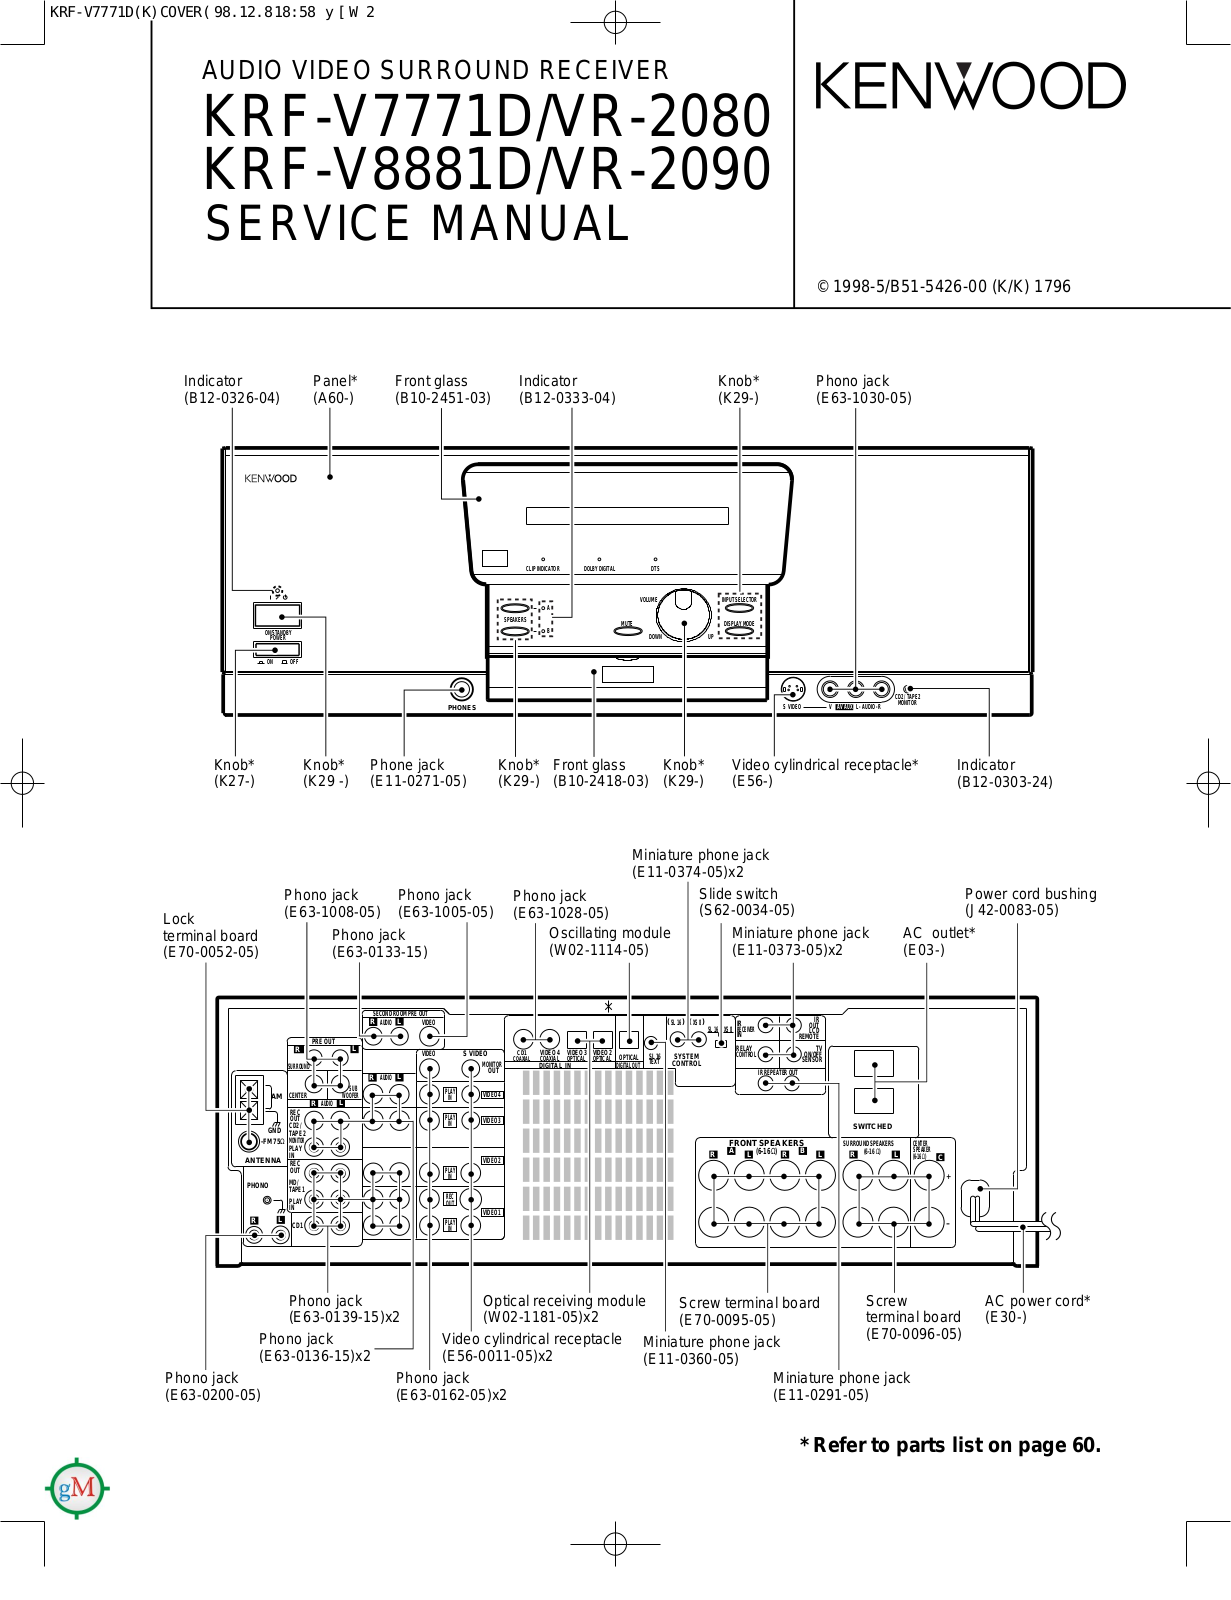 Kenwood KRFV-7771-D, KRFV-8881-D, VR-2080, VR-2090 Service manual